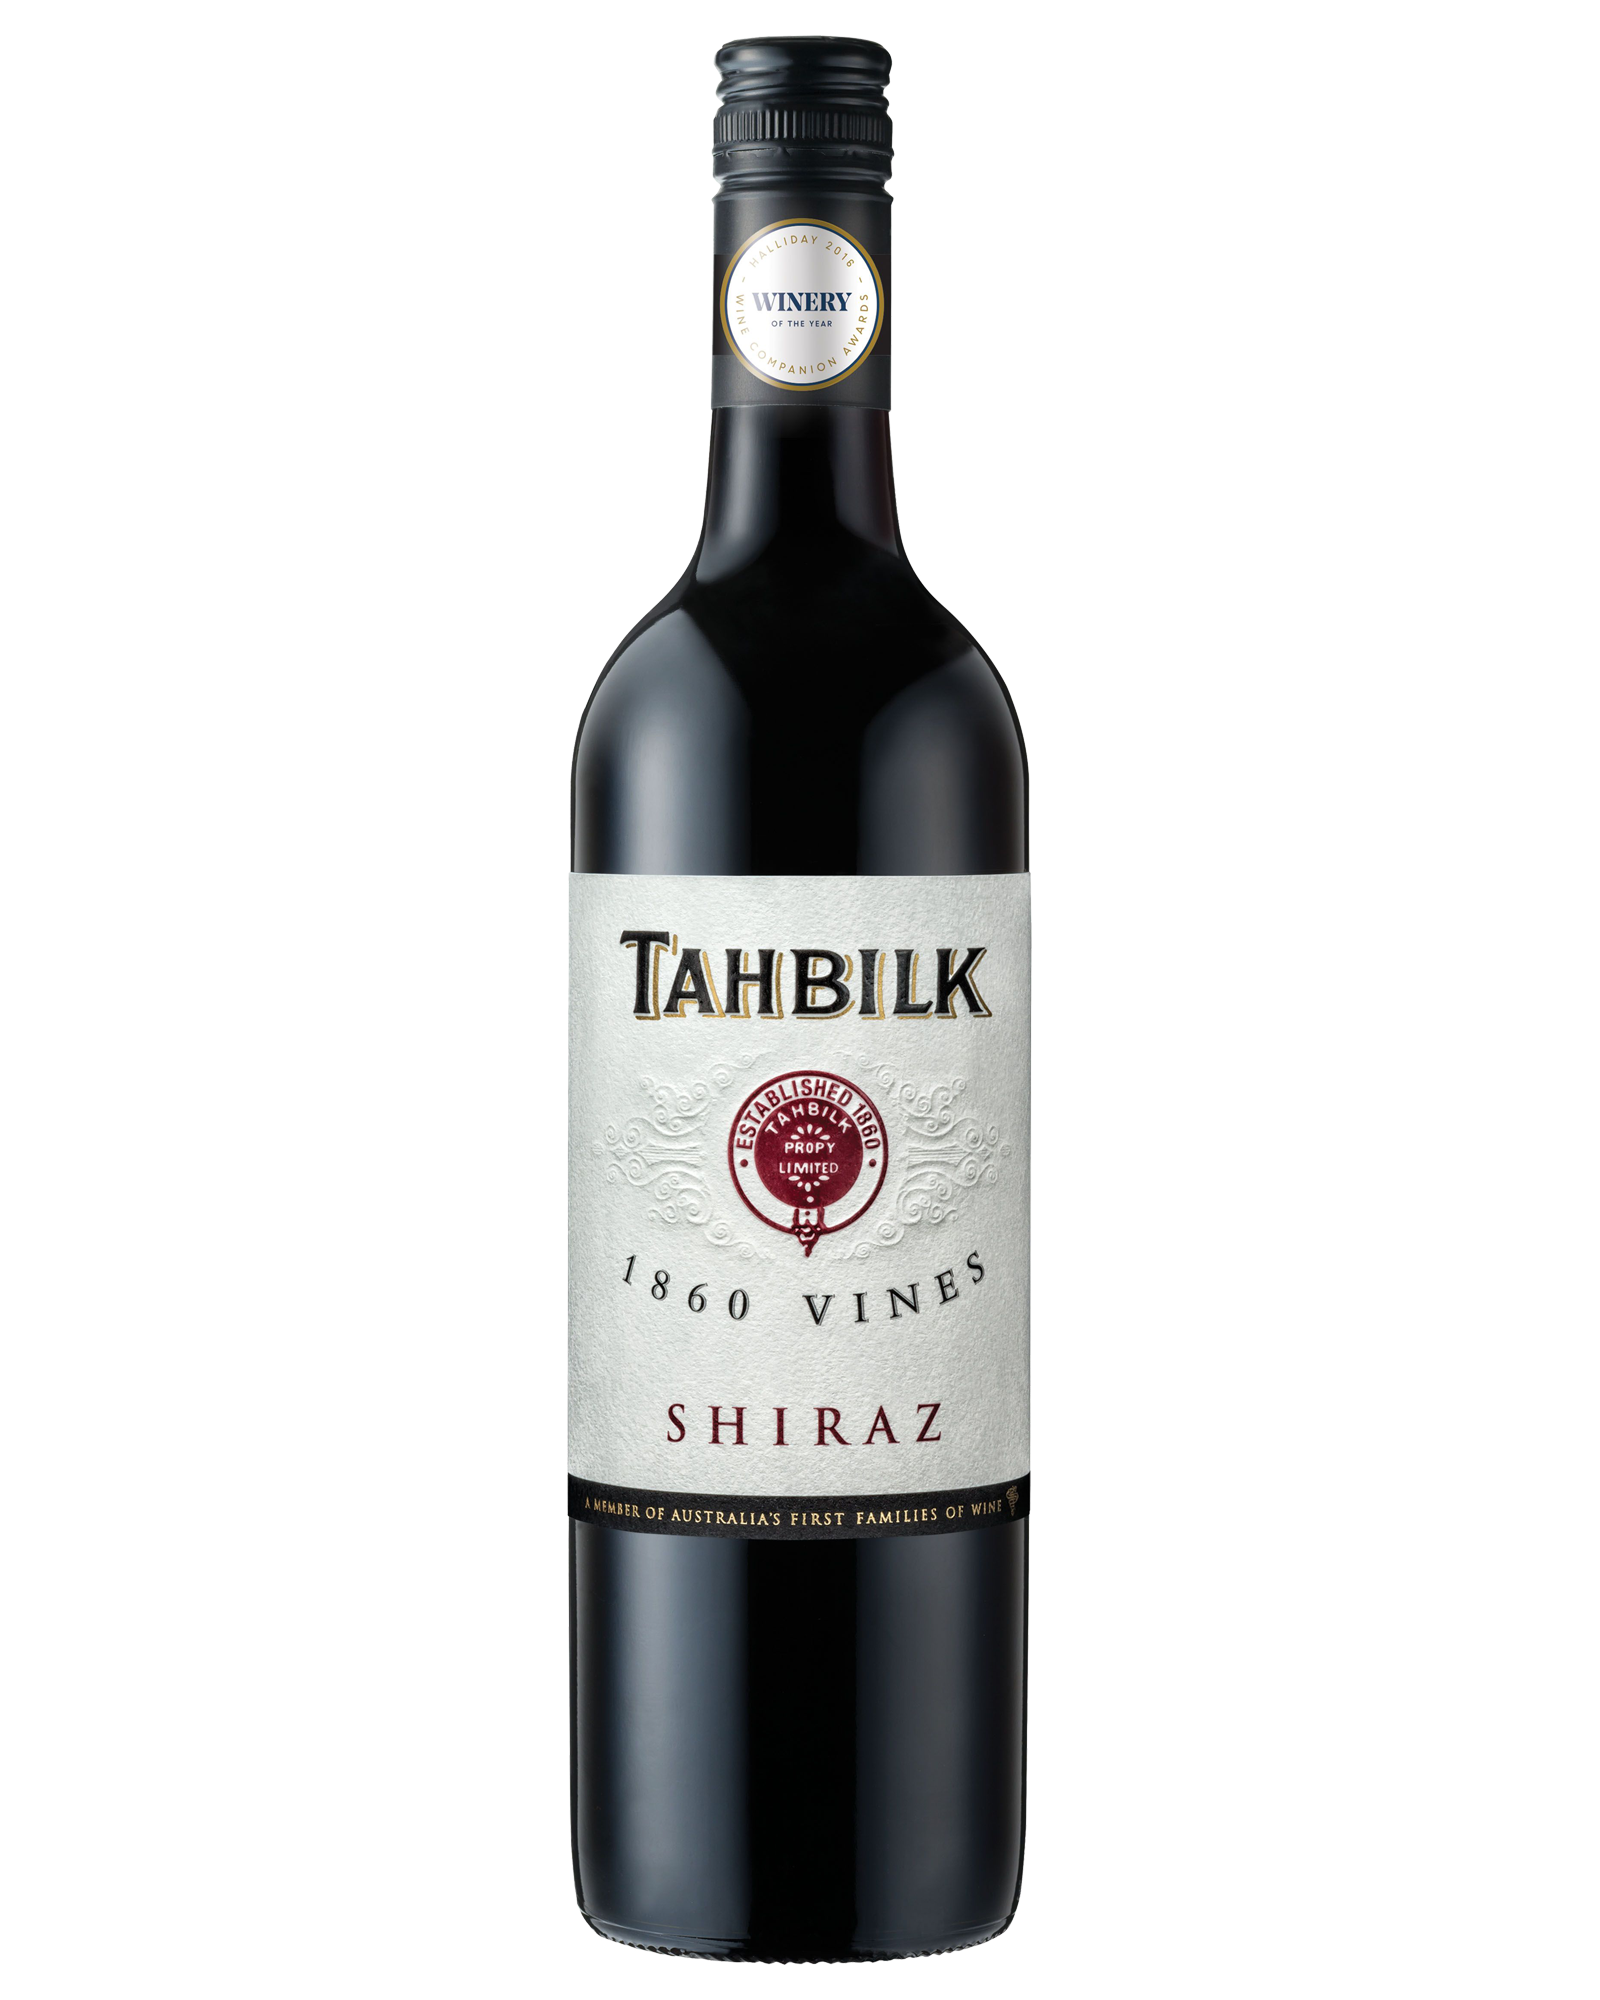 Tahbilk 1860 Vines Shiraz 2008